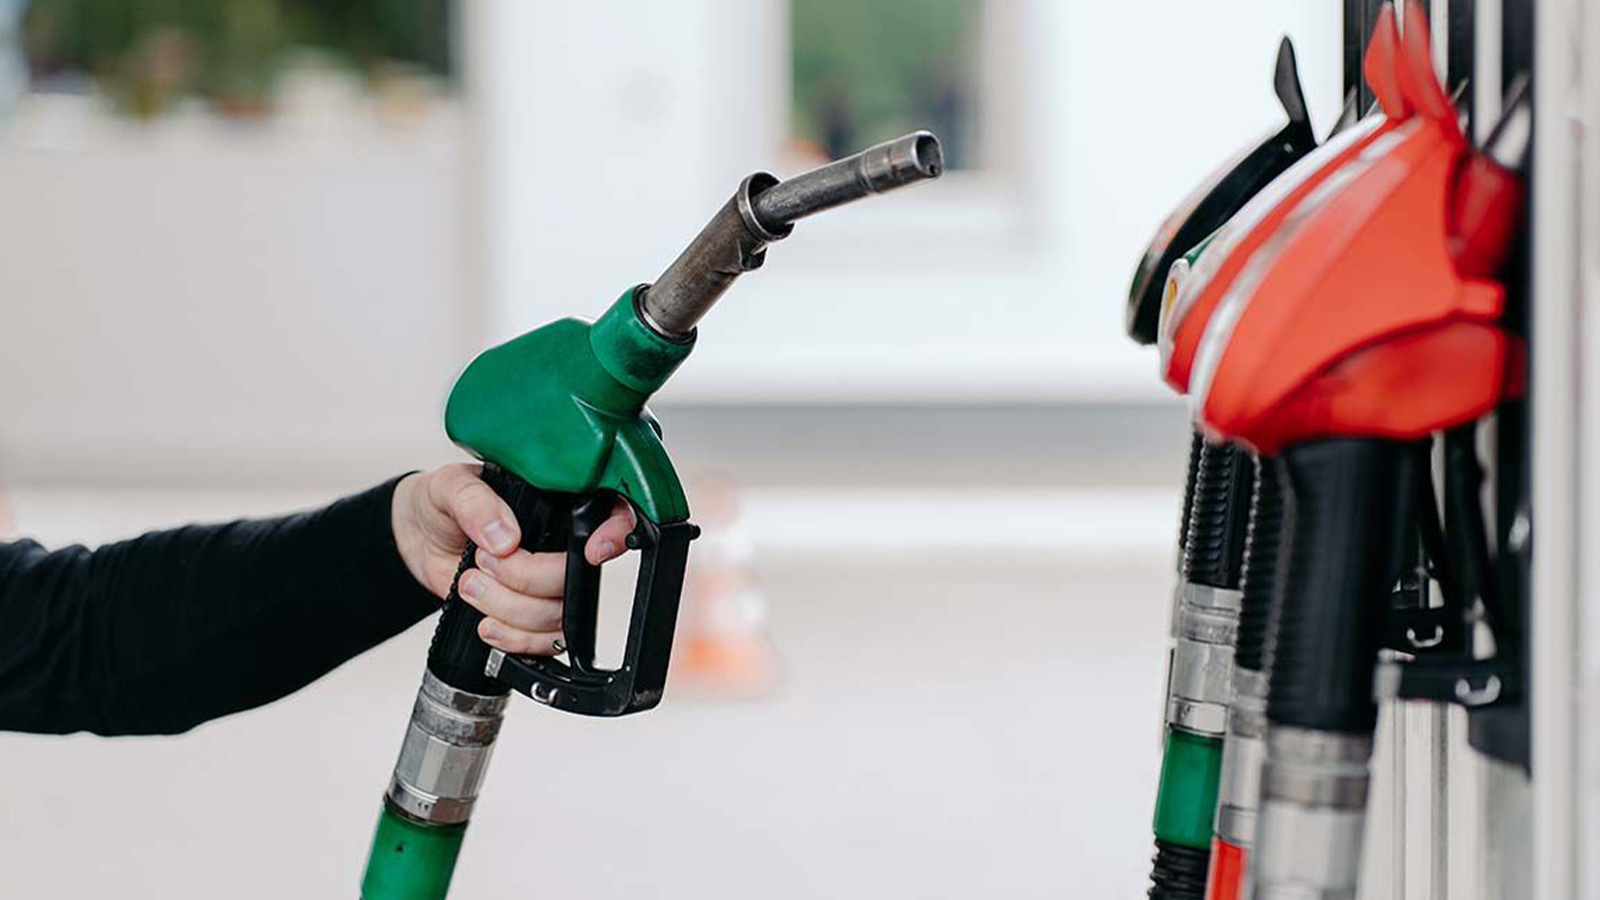 ARESEP da luz verde a fuerte incremento en combustibles y dispara litro de gasolina súper a ¢909